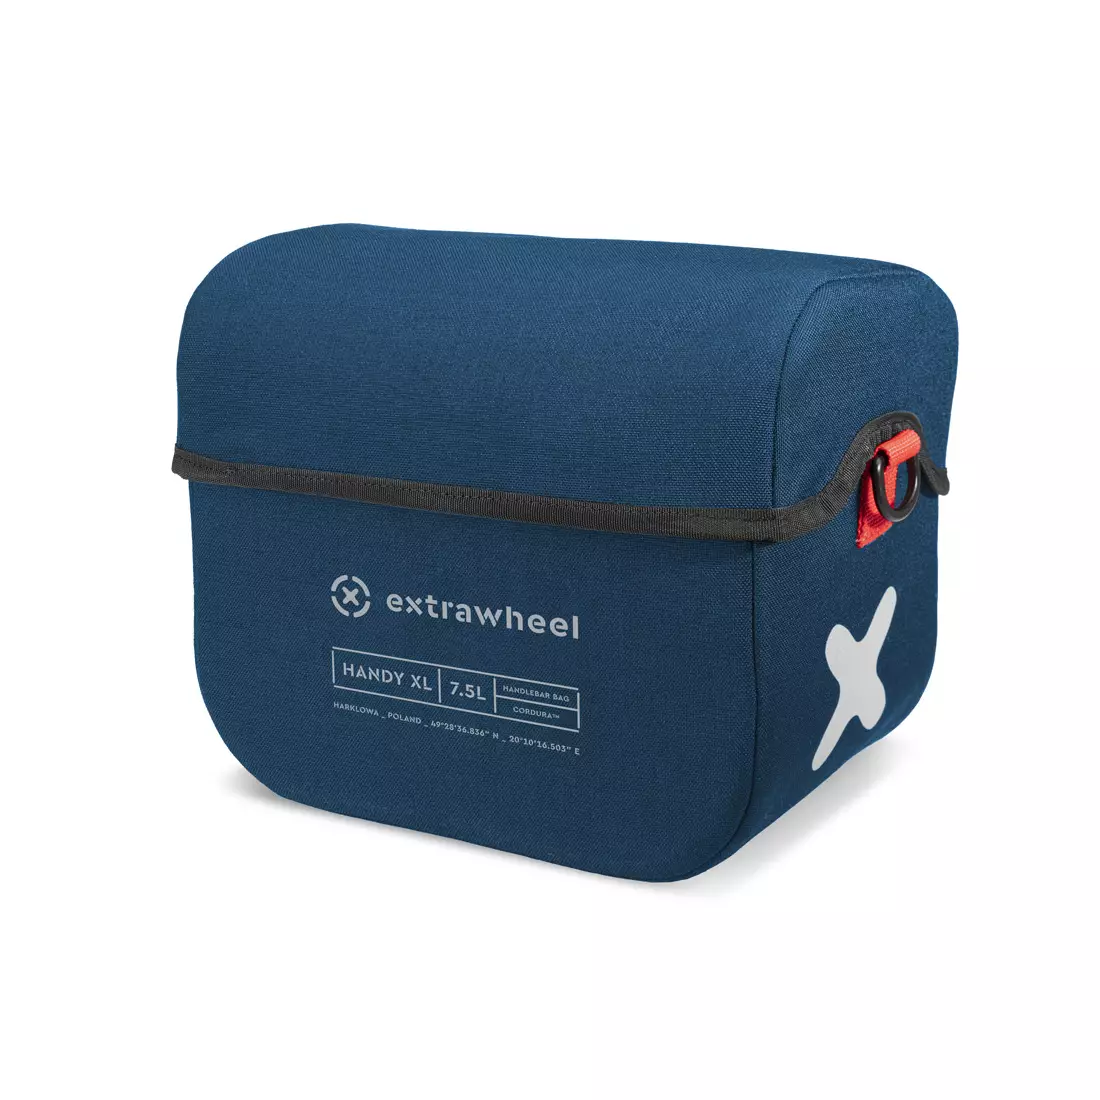 EXTRAWHEEL HANDY PREMIUM CORDURA XL taška na řídítka kola, modrý 7,5 L